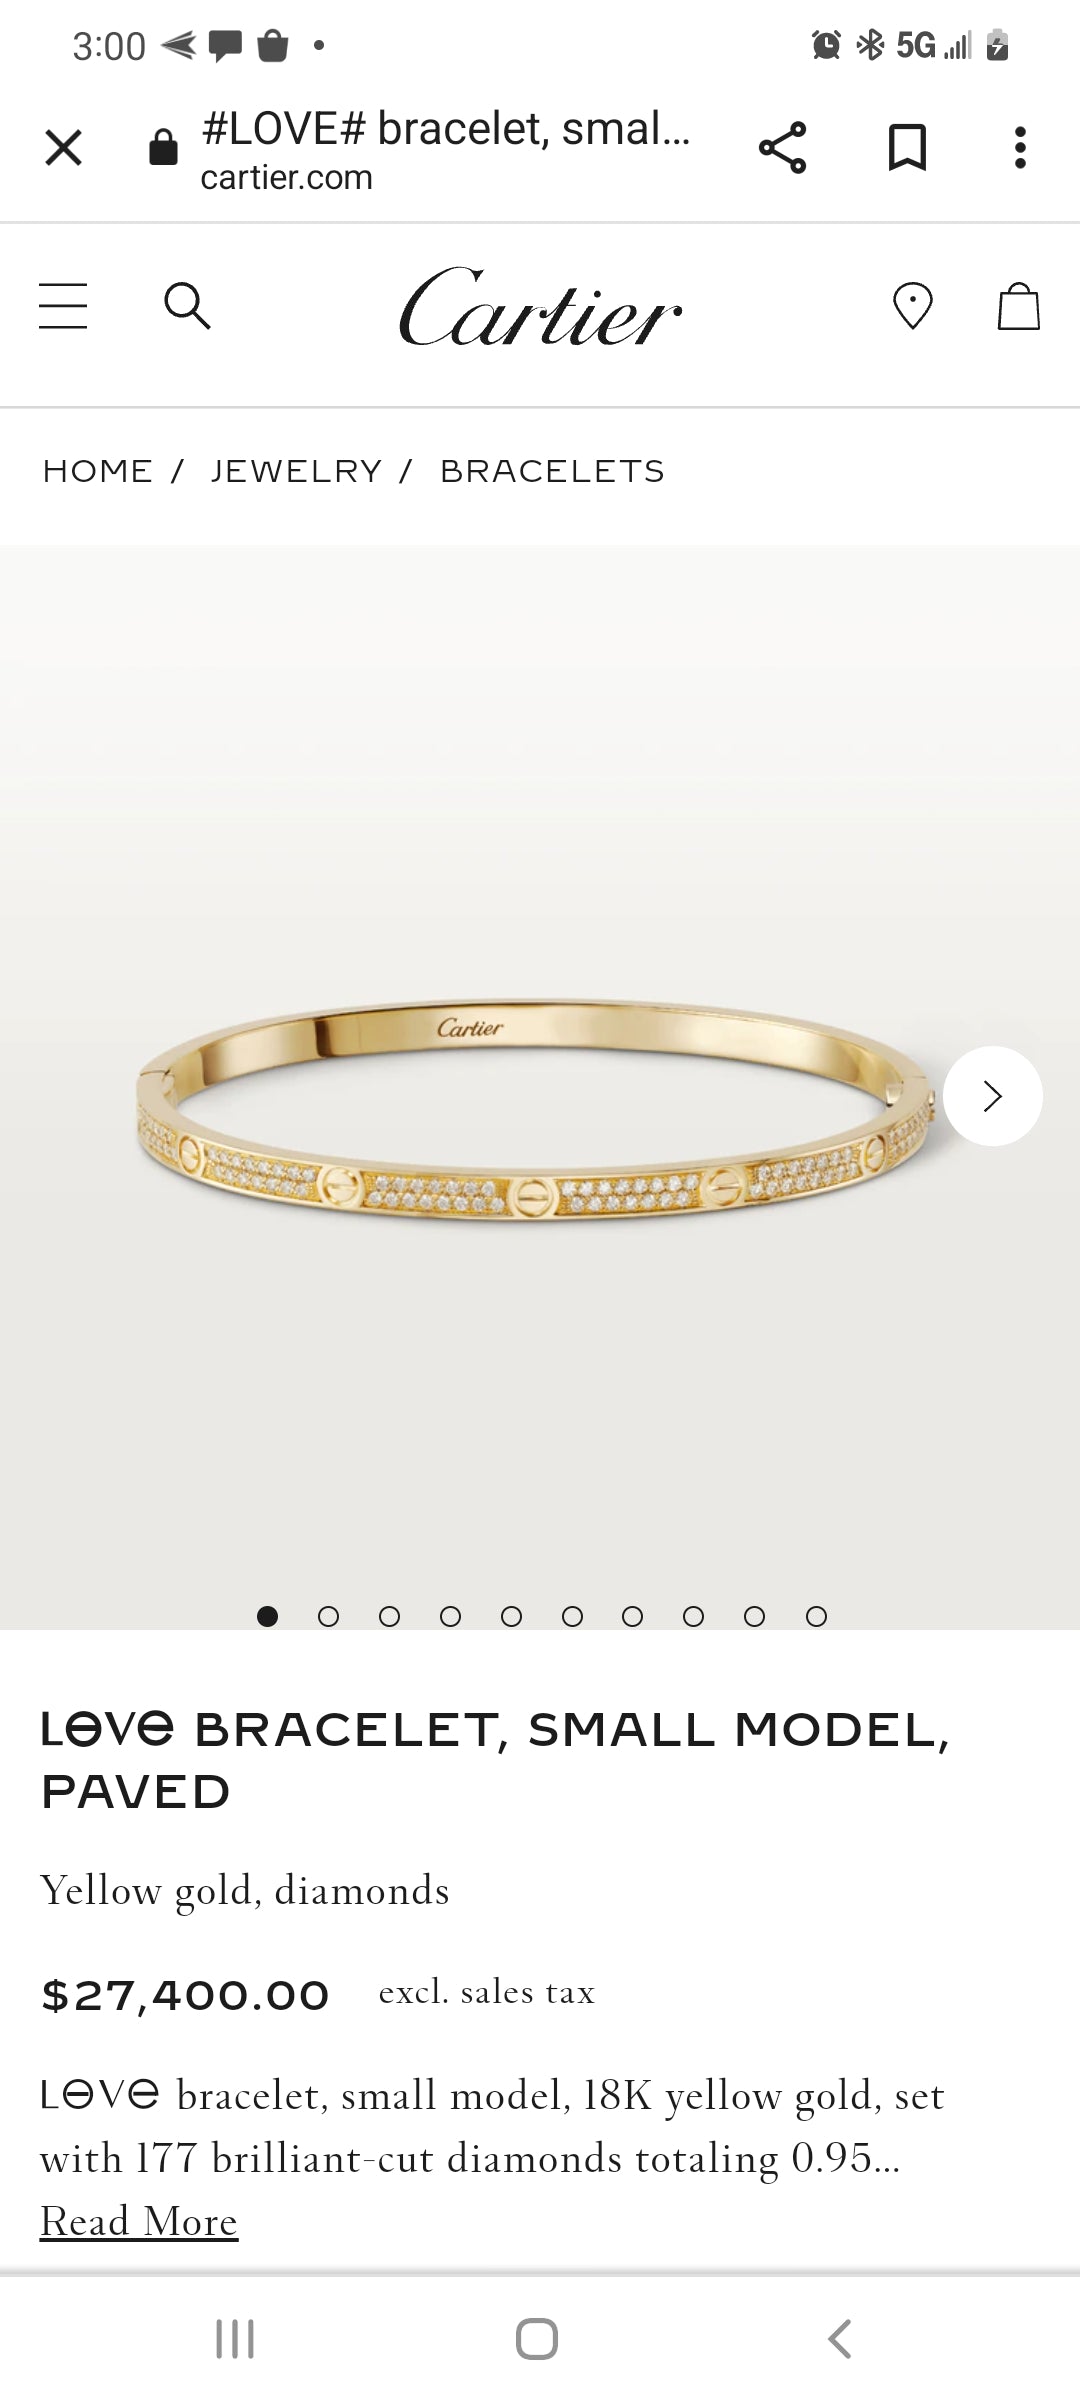 LOVE# bracelet, small model